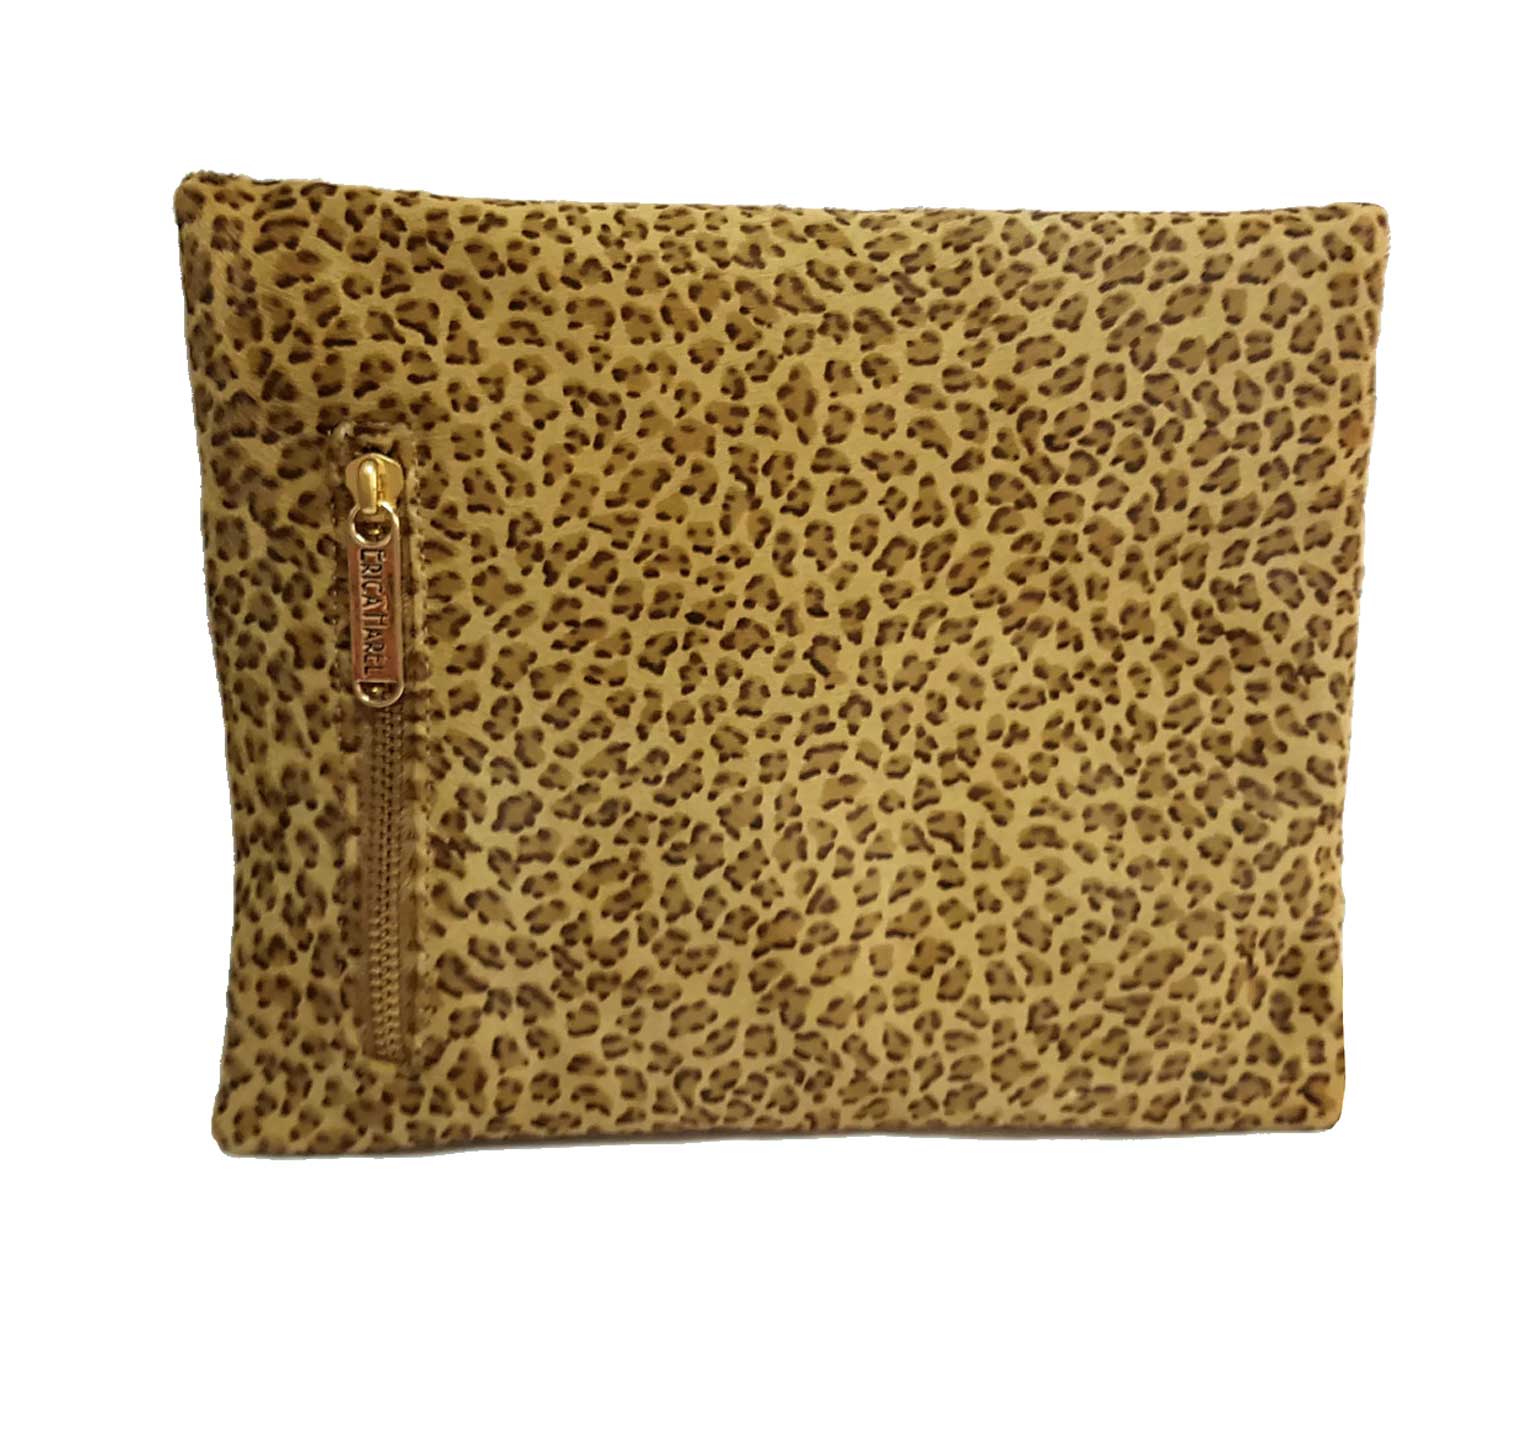 Leopard Hair on Hide Leather Clutch | Versatile 4-way Bag | Erica Harel